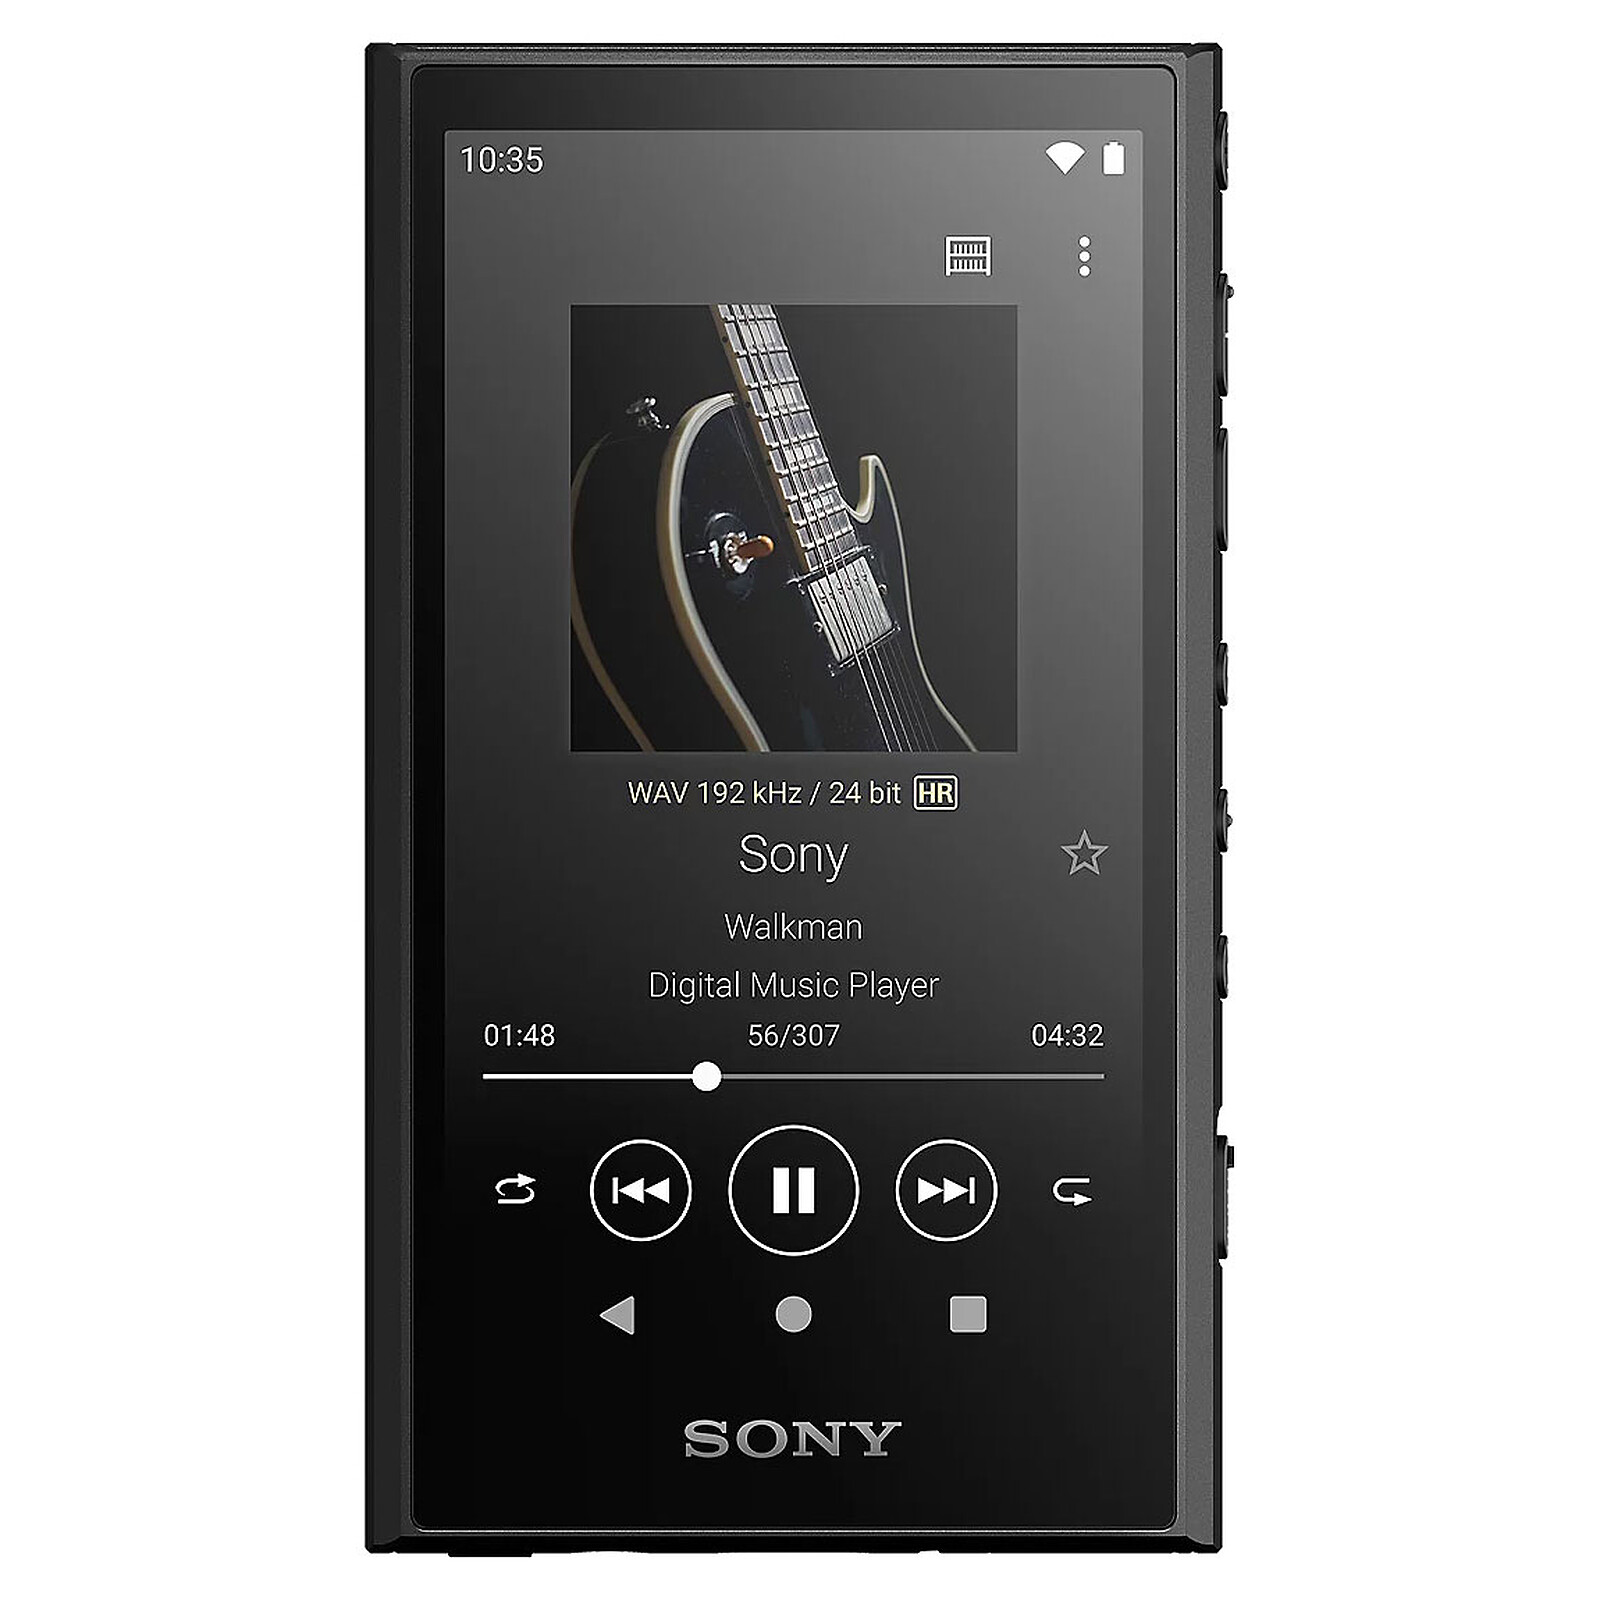 Sony Reproductor MP3 Walkman NW-E394 de 8 GB con radio FM, negro :  : Electrónica